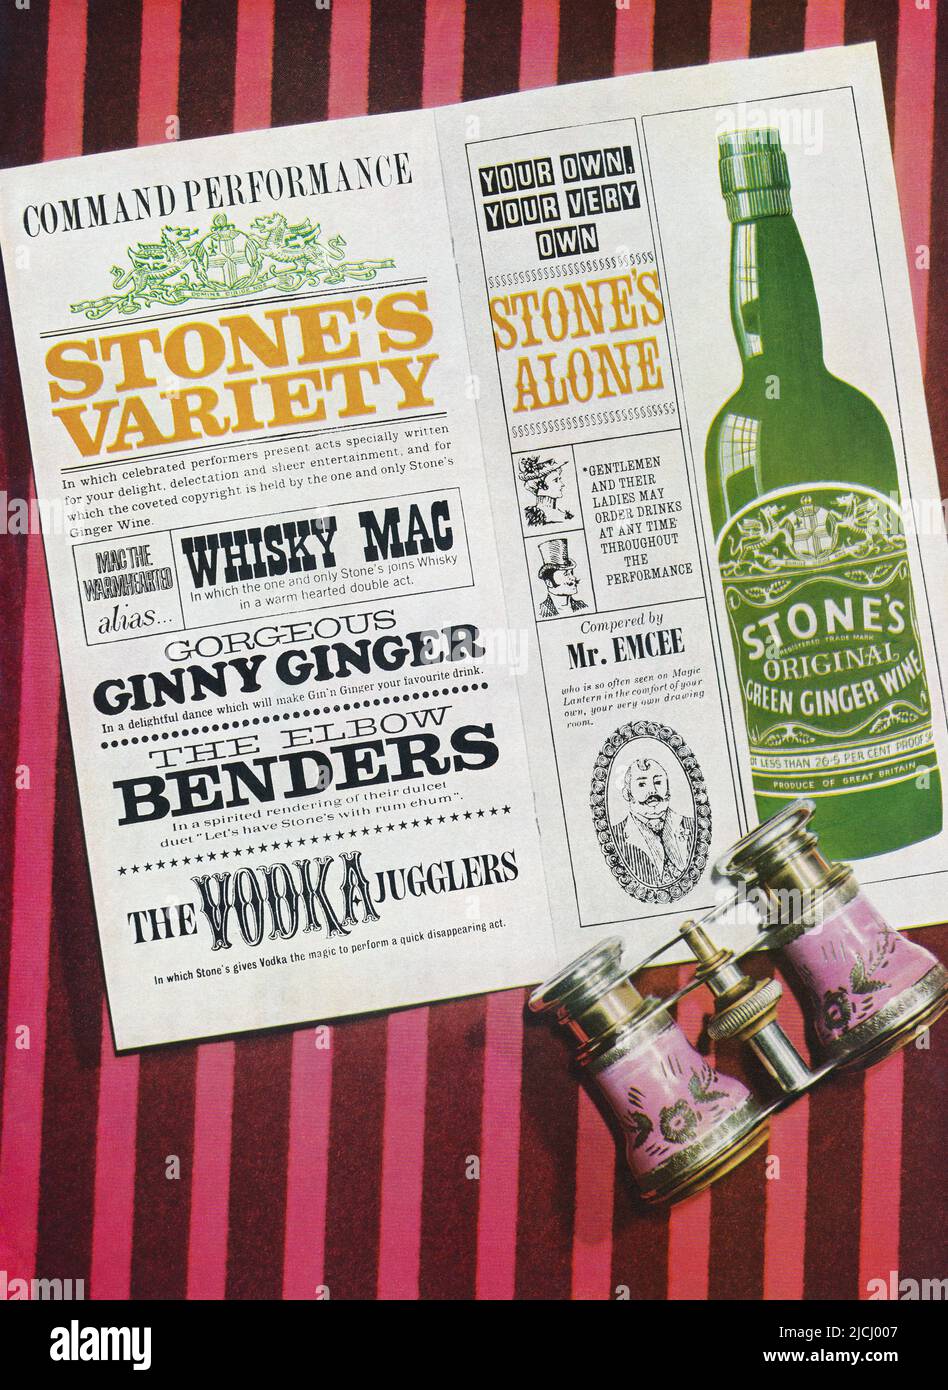 1964 Anuncio británico para Stone's Original Green Ginger Wine. Foto de stock